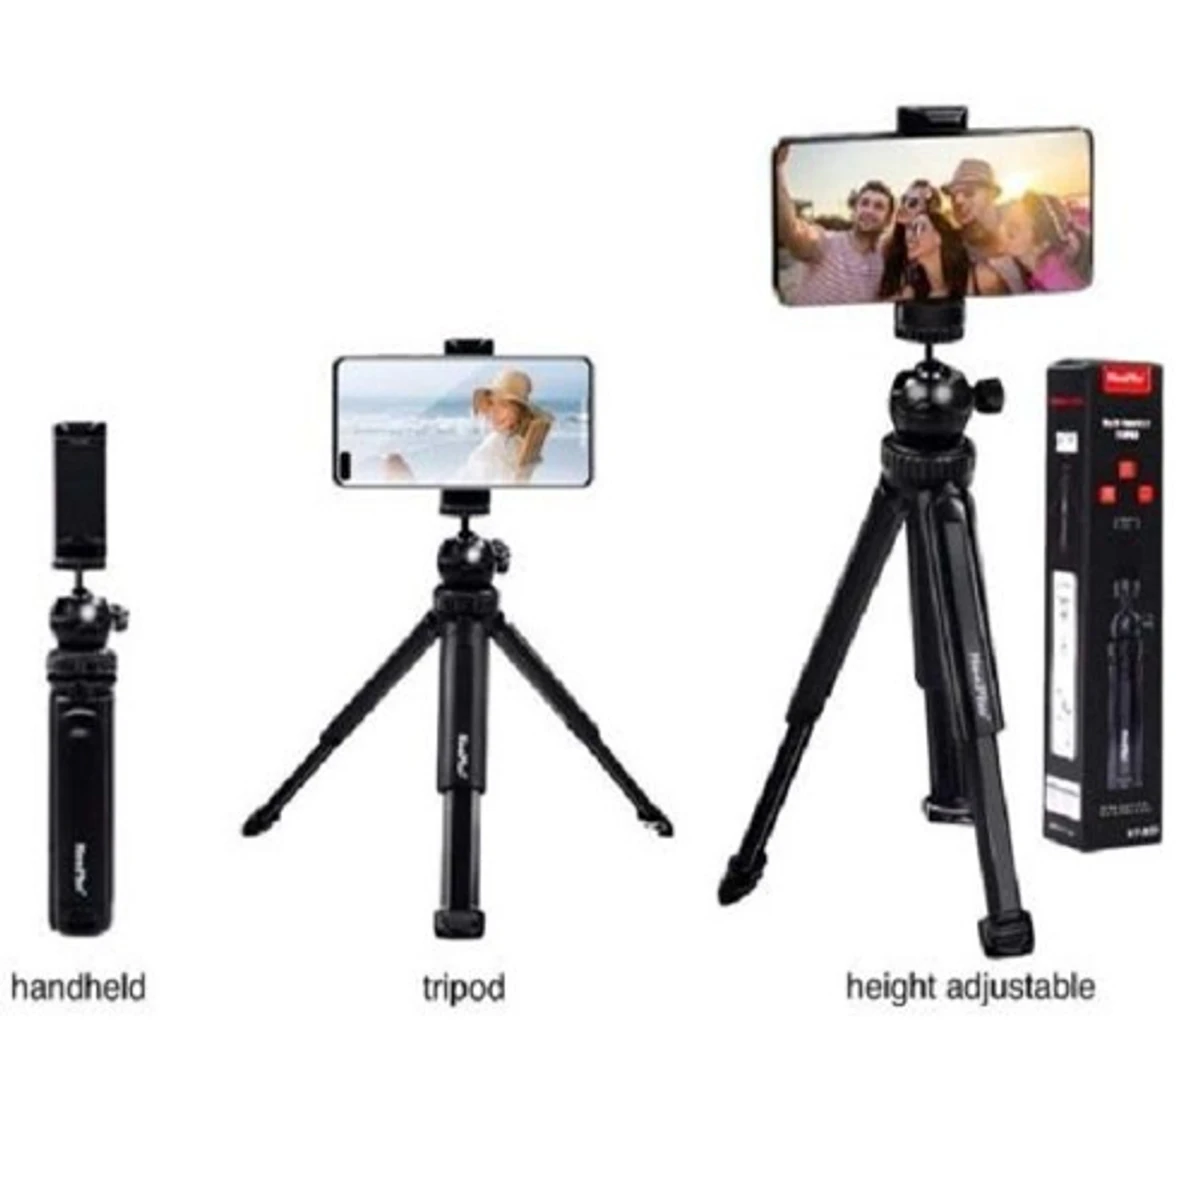 NeePho Np-999 Tripod Multi Function Tripod Handheld Extendable Selfie Stick